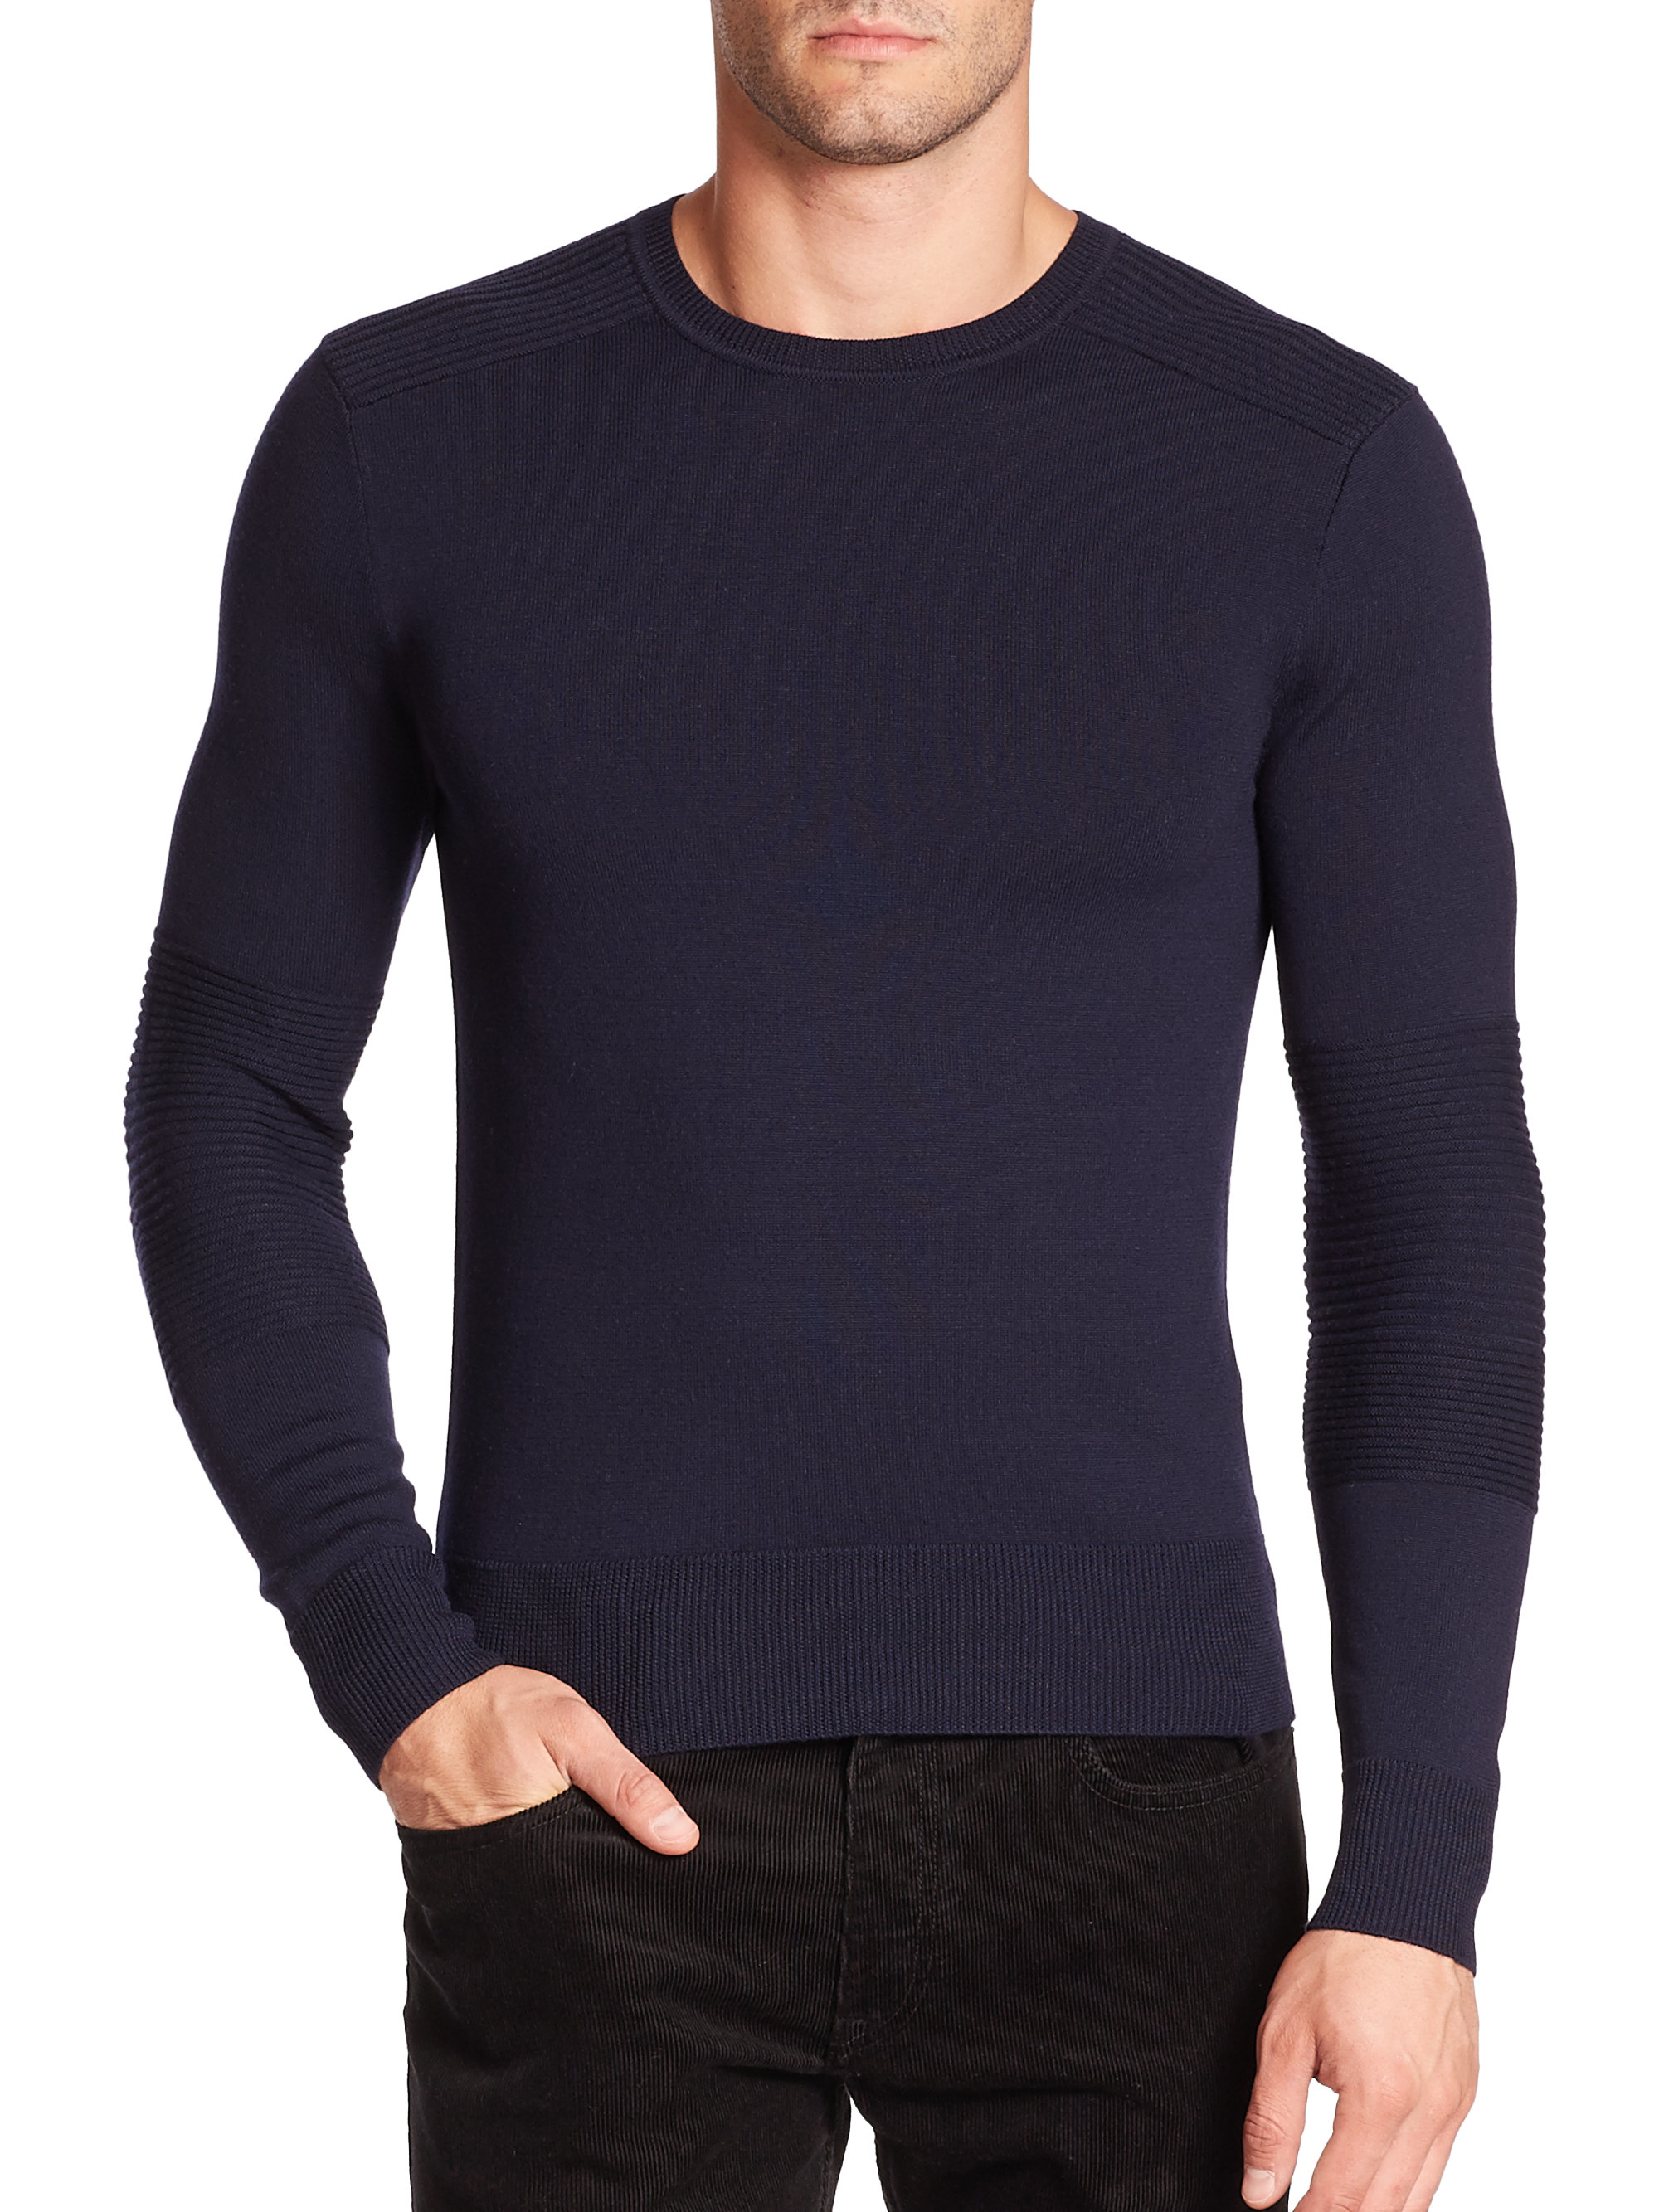 Polo Ralph Lauren Wool Merino Crewneck Sweater in Blue for Men - Lyst